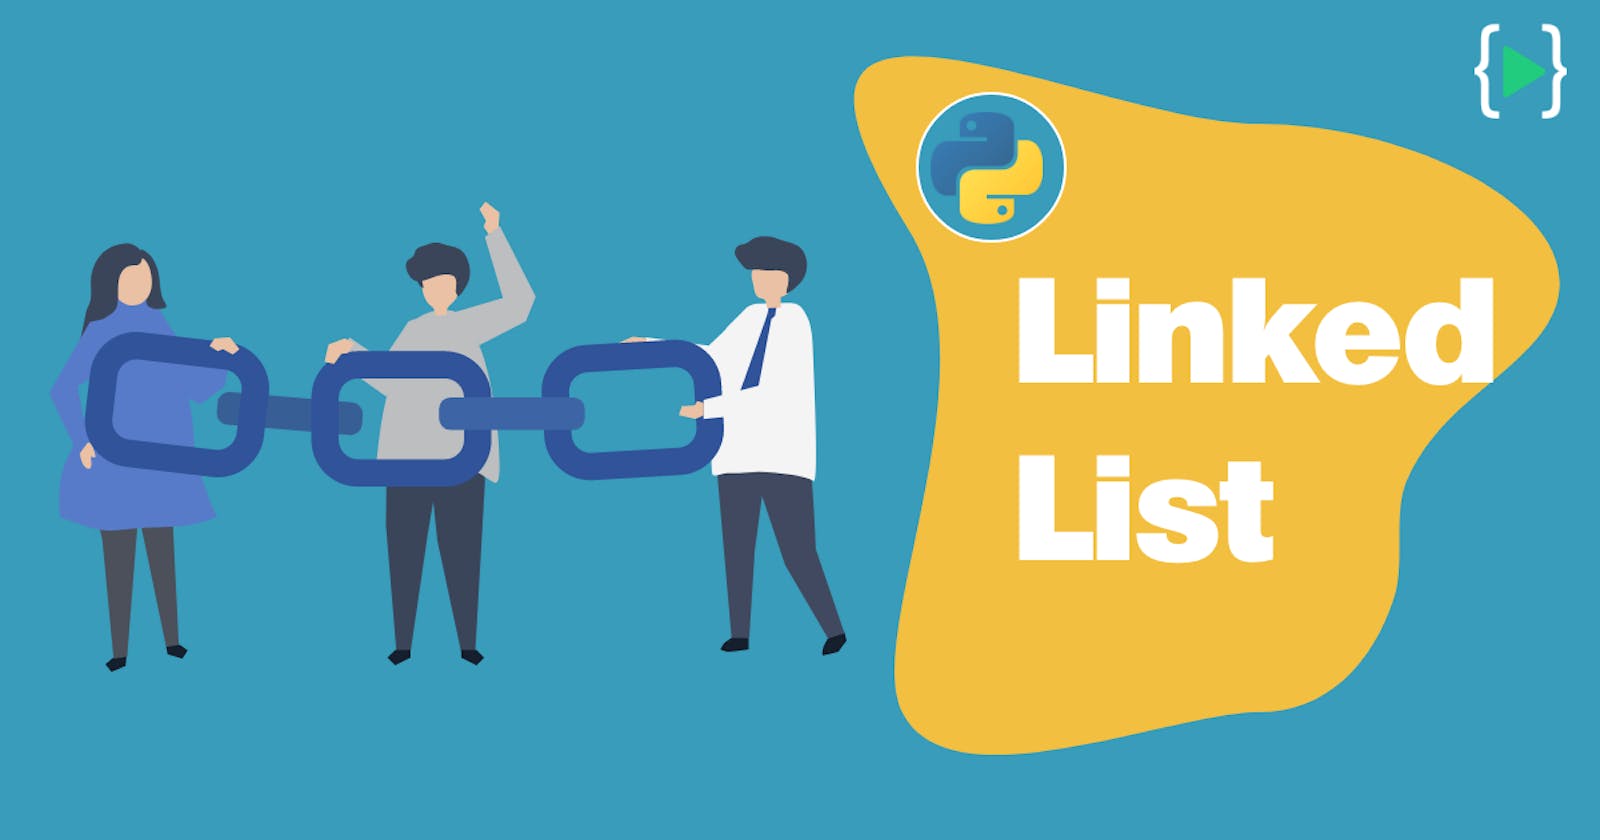 Linked List in Python